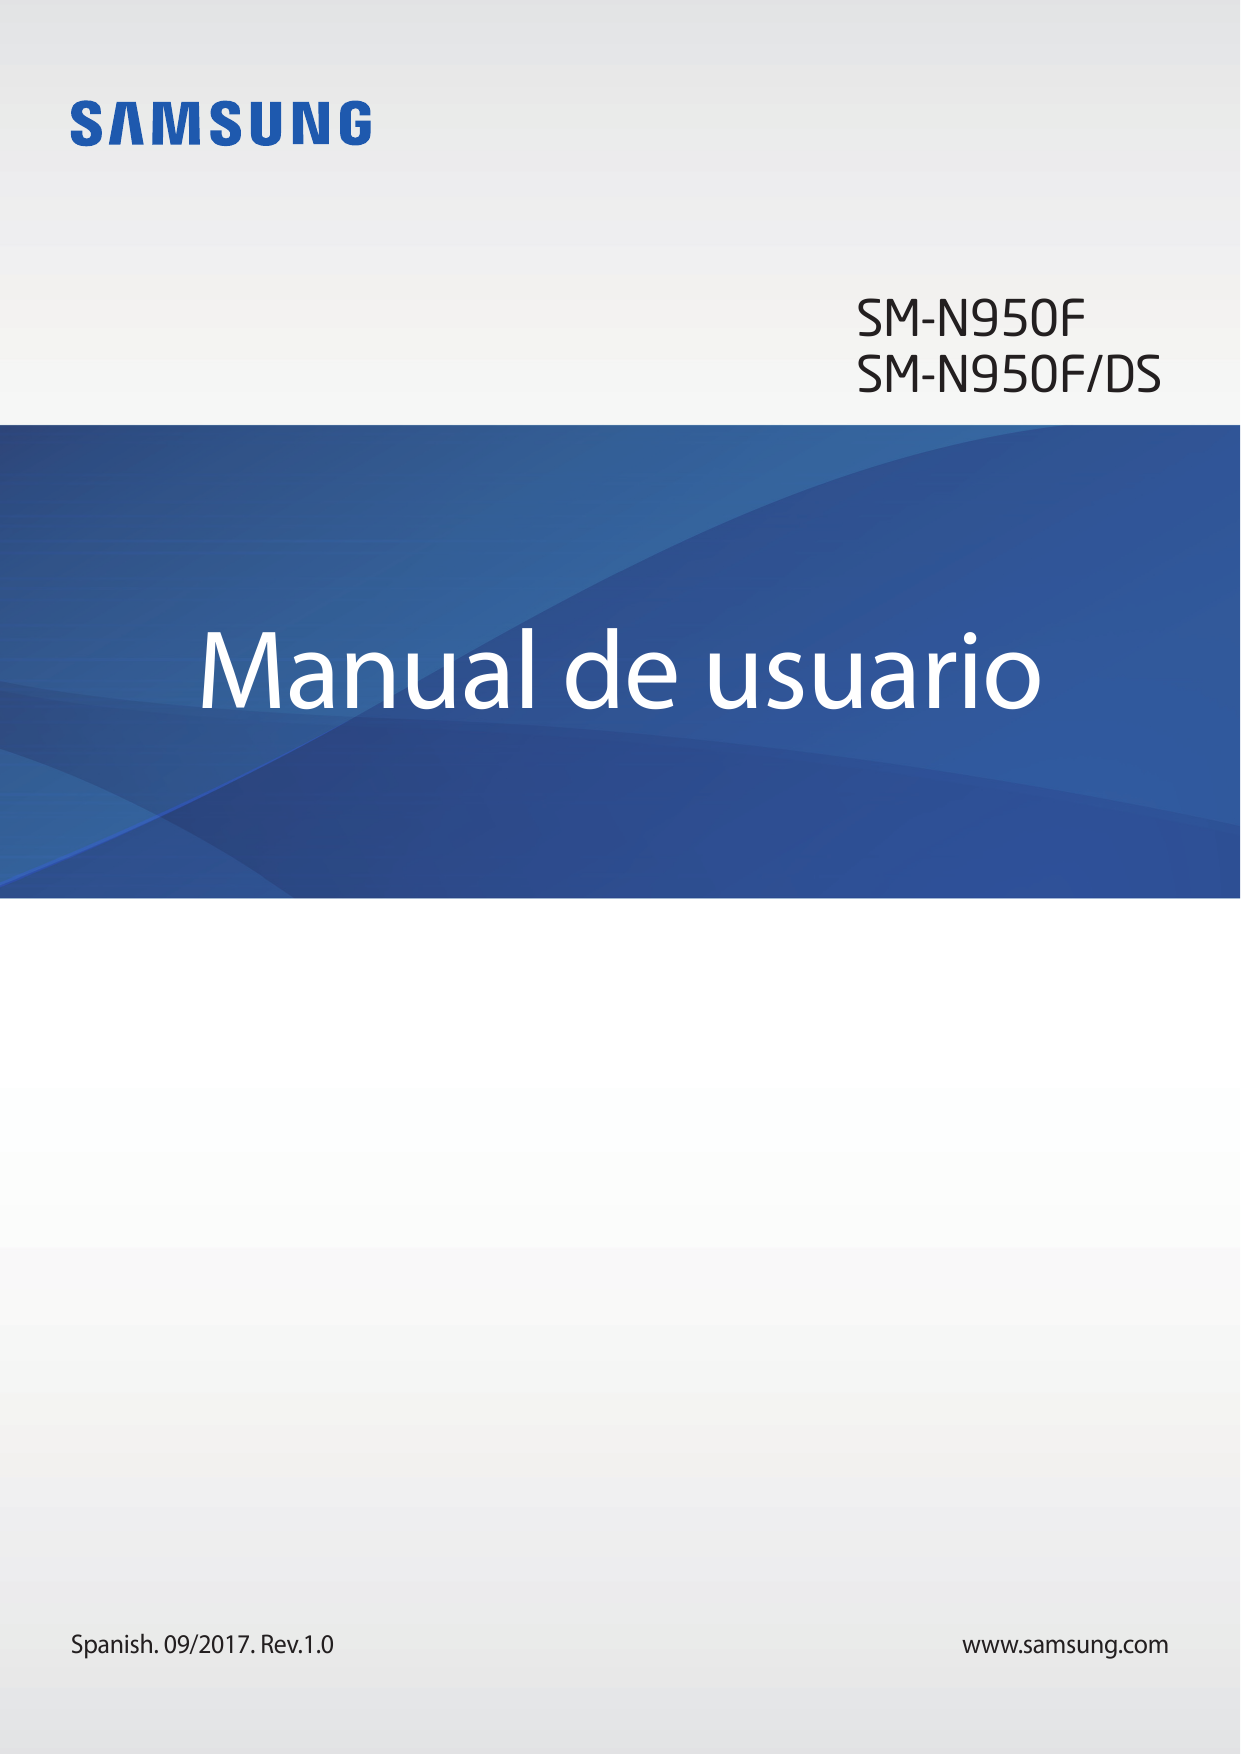 SM-N950FSM-N950F/DSManual de usuarioSpanish. 09/2017. Rev.1.0www.samsung.com